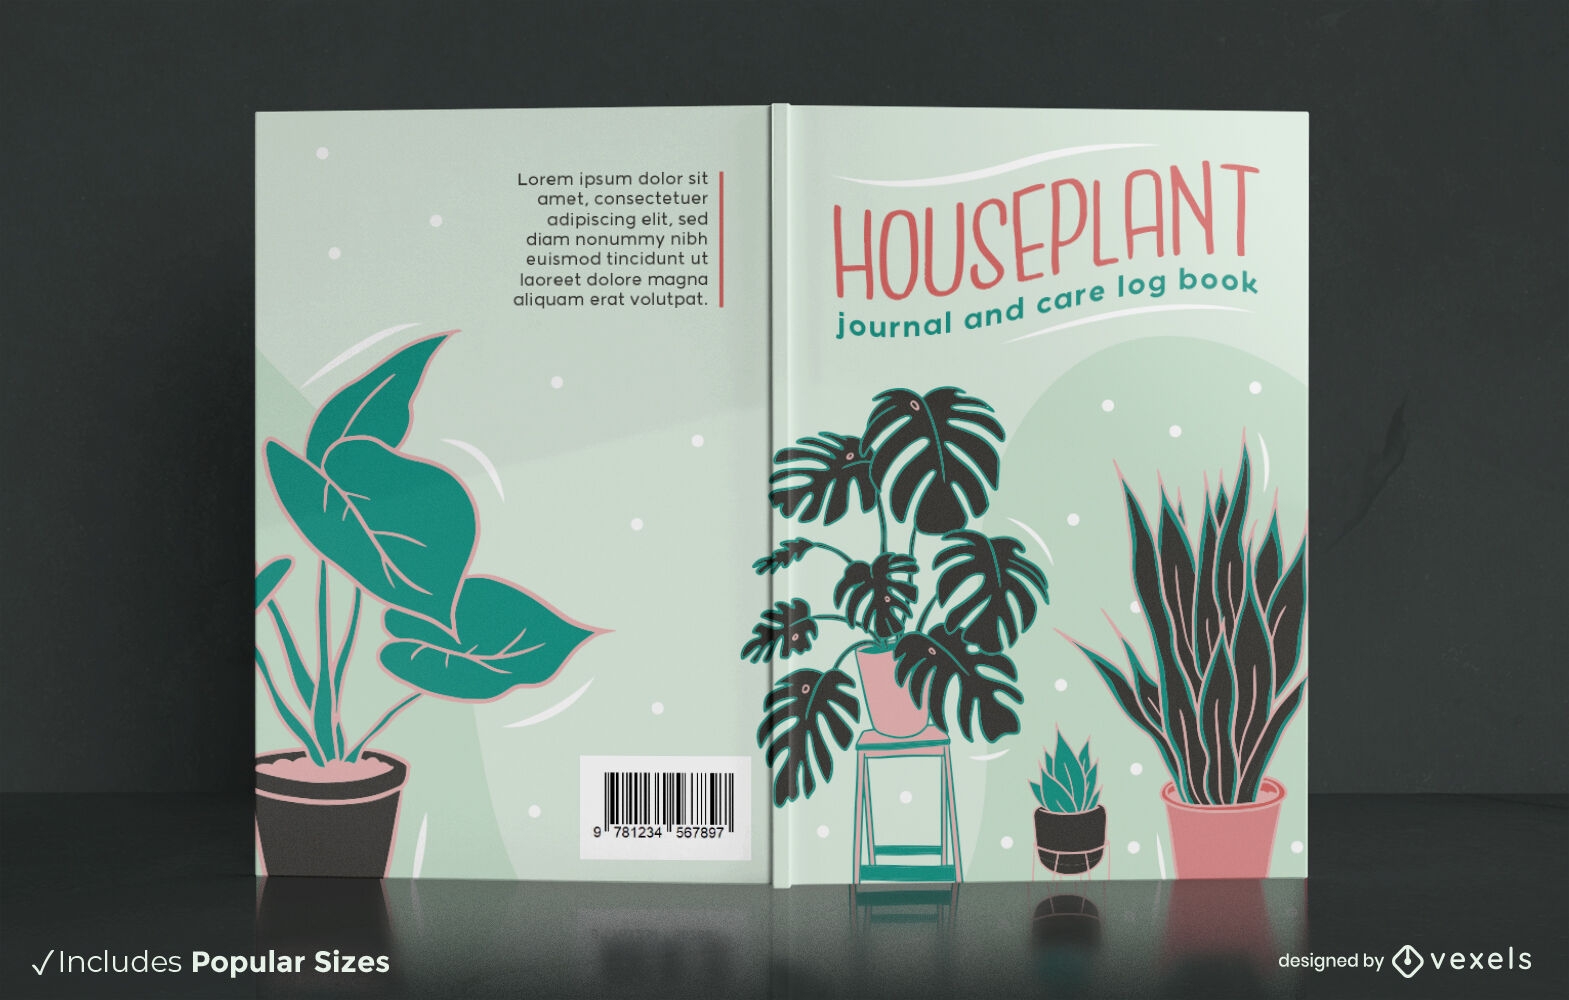 Houseplant journal book cover design